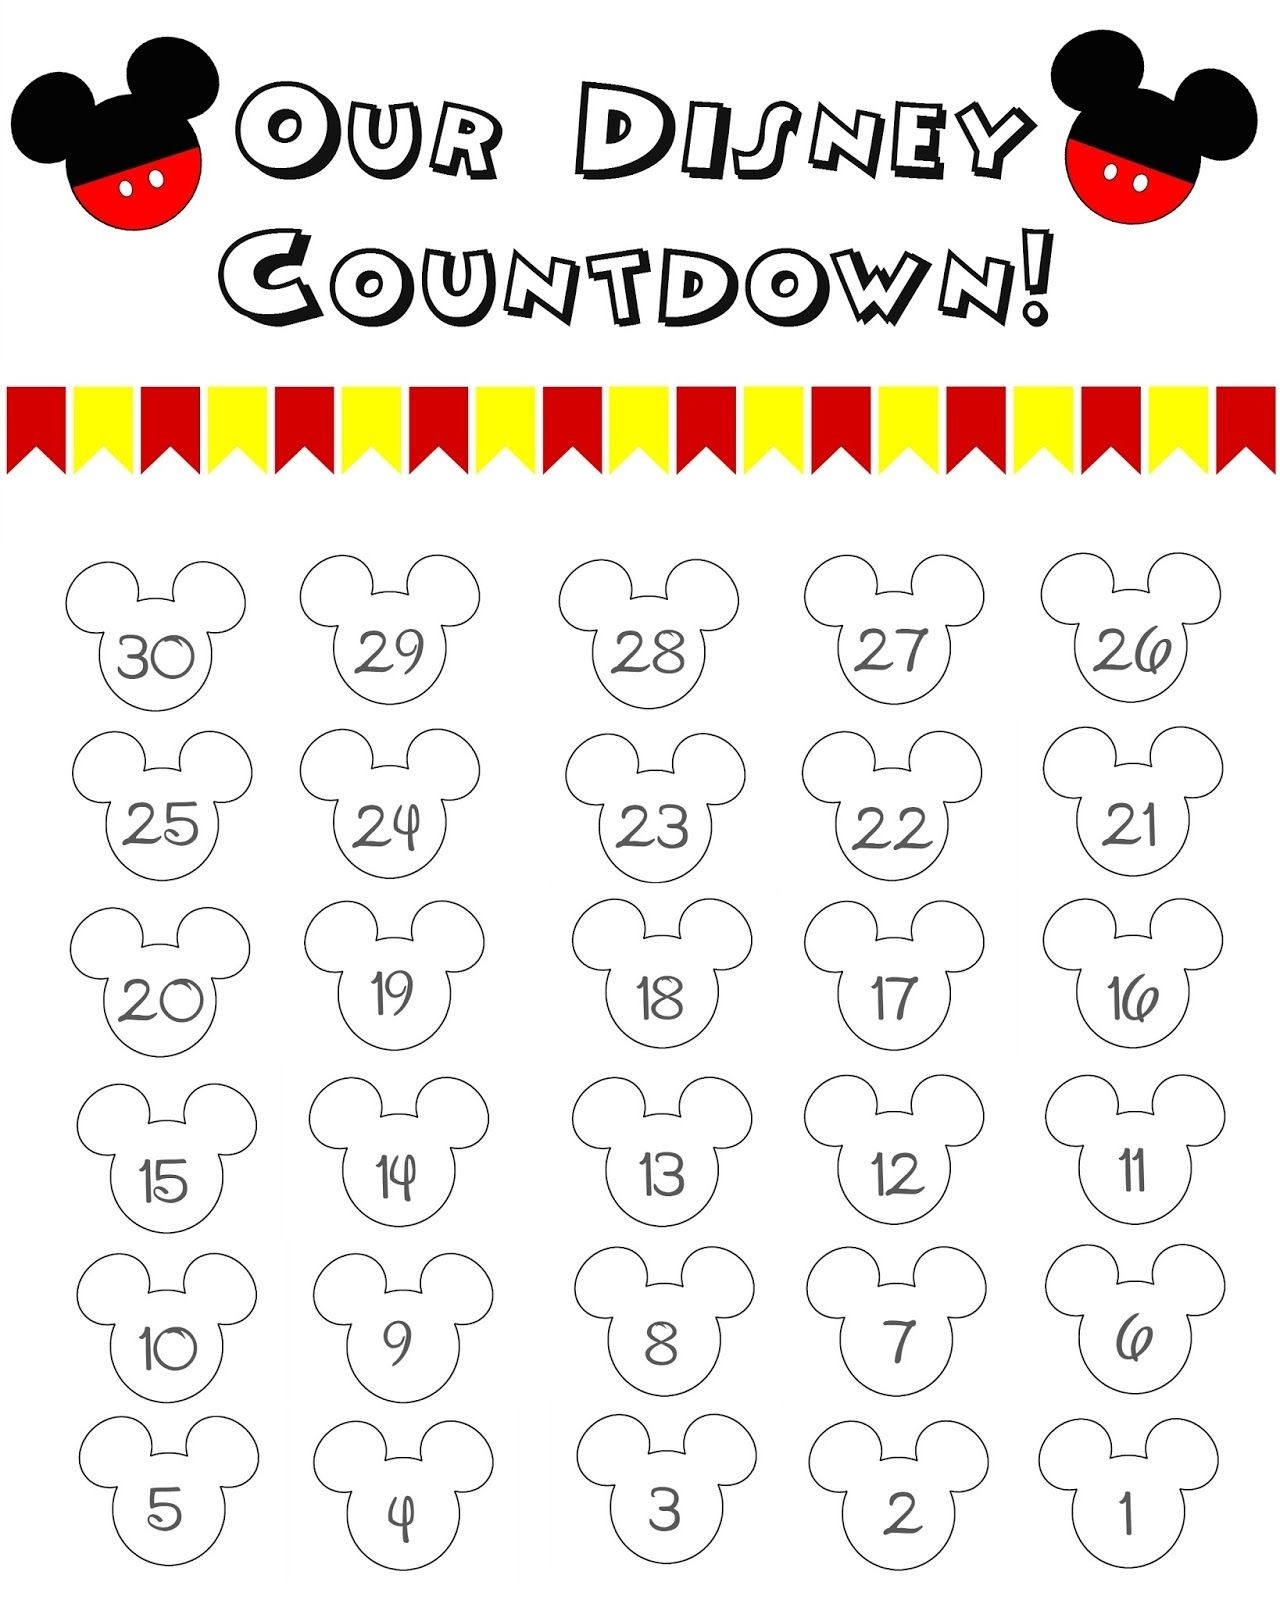 Disney World Countdown Calendar - Free Printable | The Momma-Disney Themed Printable Monthly Calendar